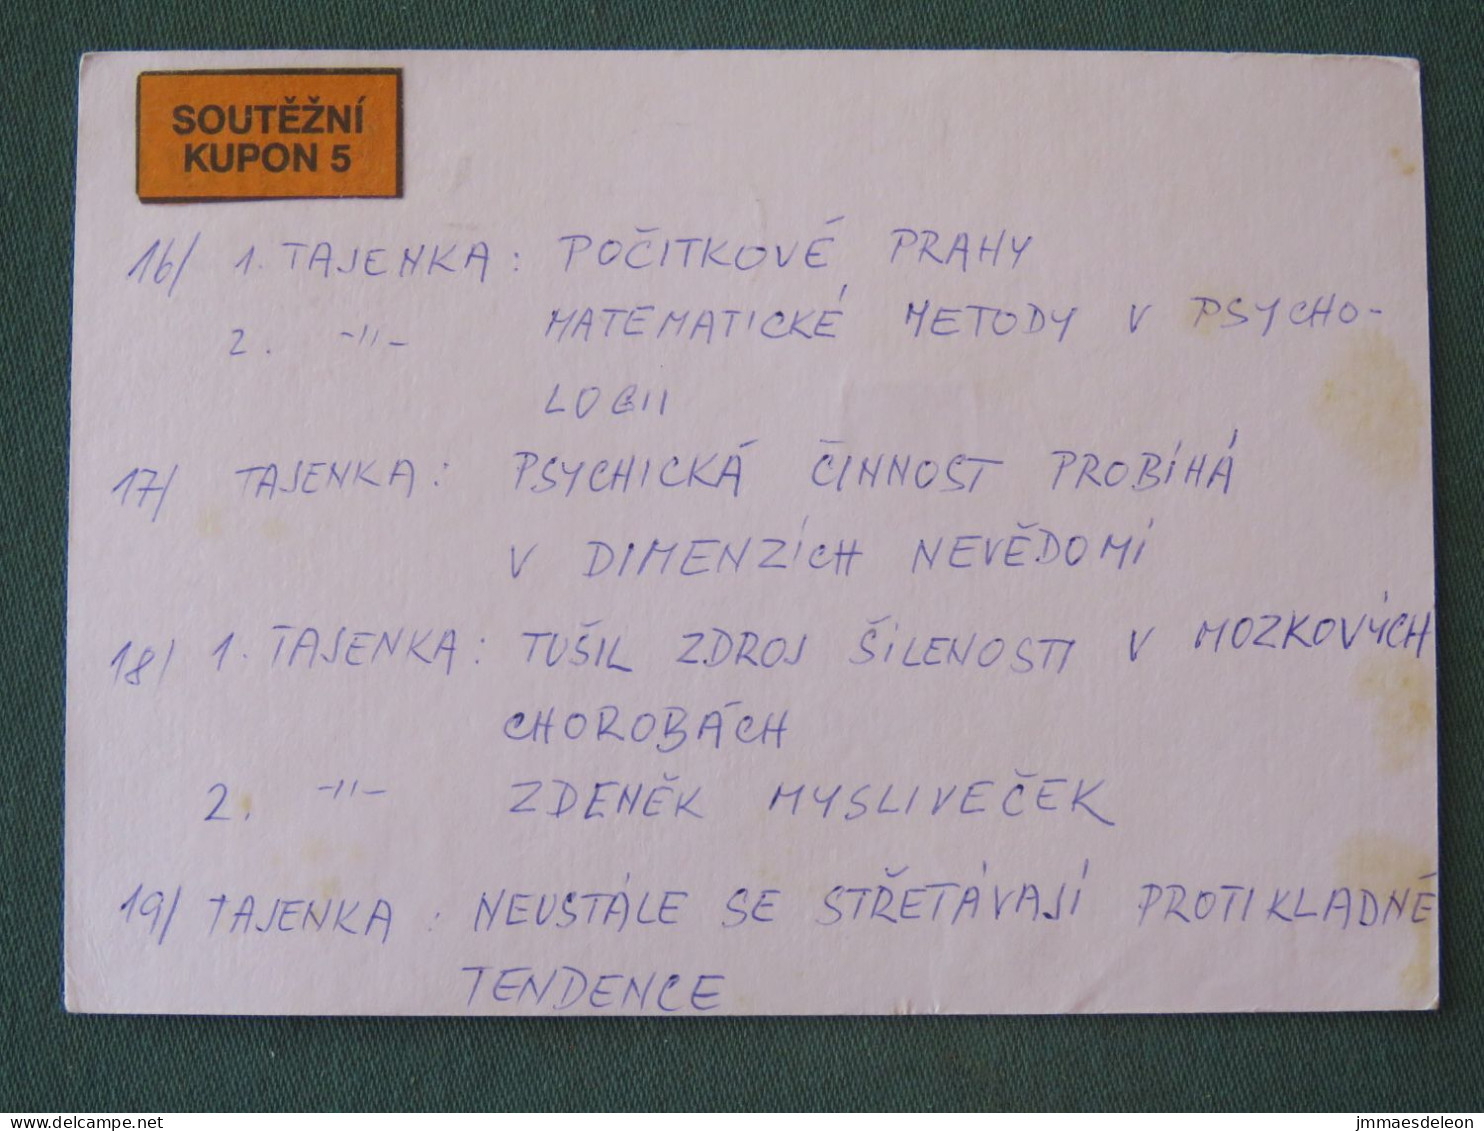 Czech Republic 2001 Stationery Postcard 5.40 Kcs Prague Sent Locally From Ostrava, EMS Slogan - Covers & Documents